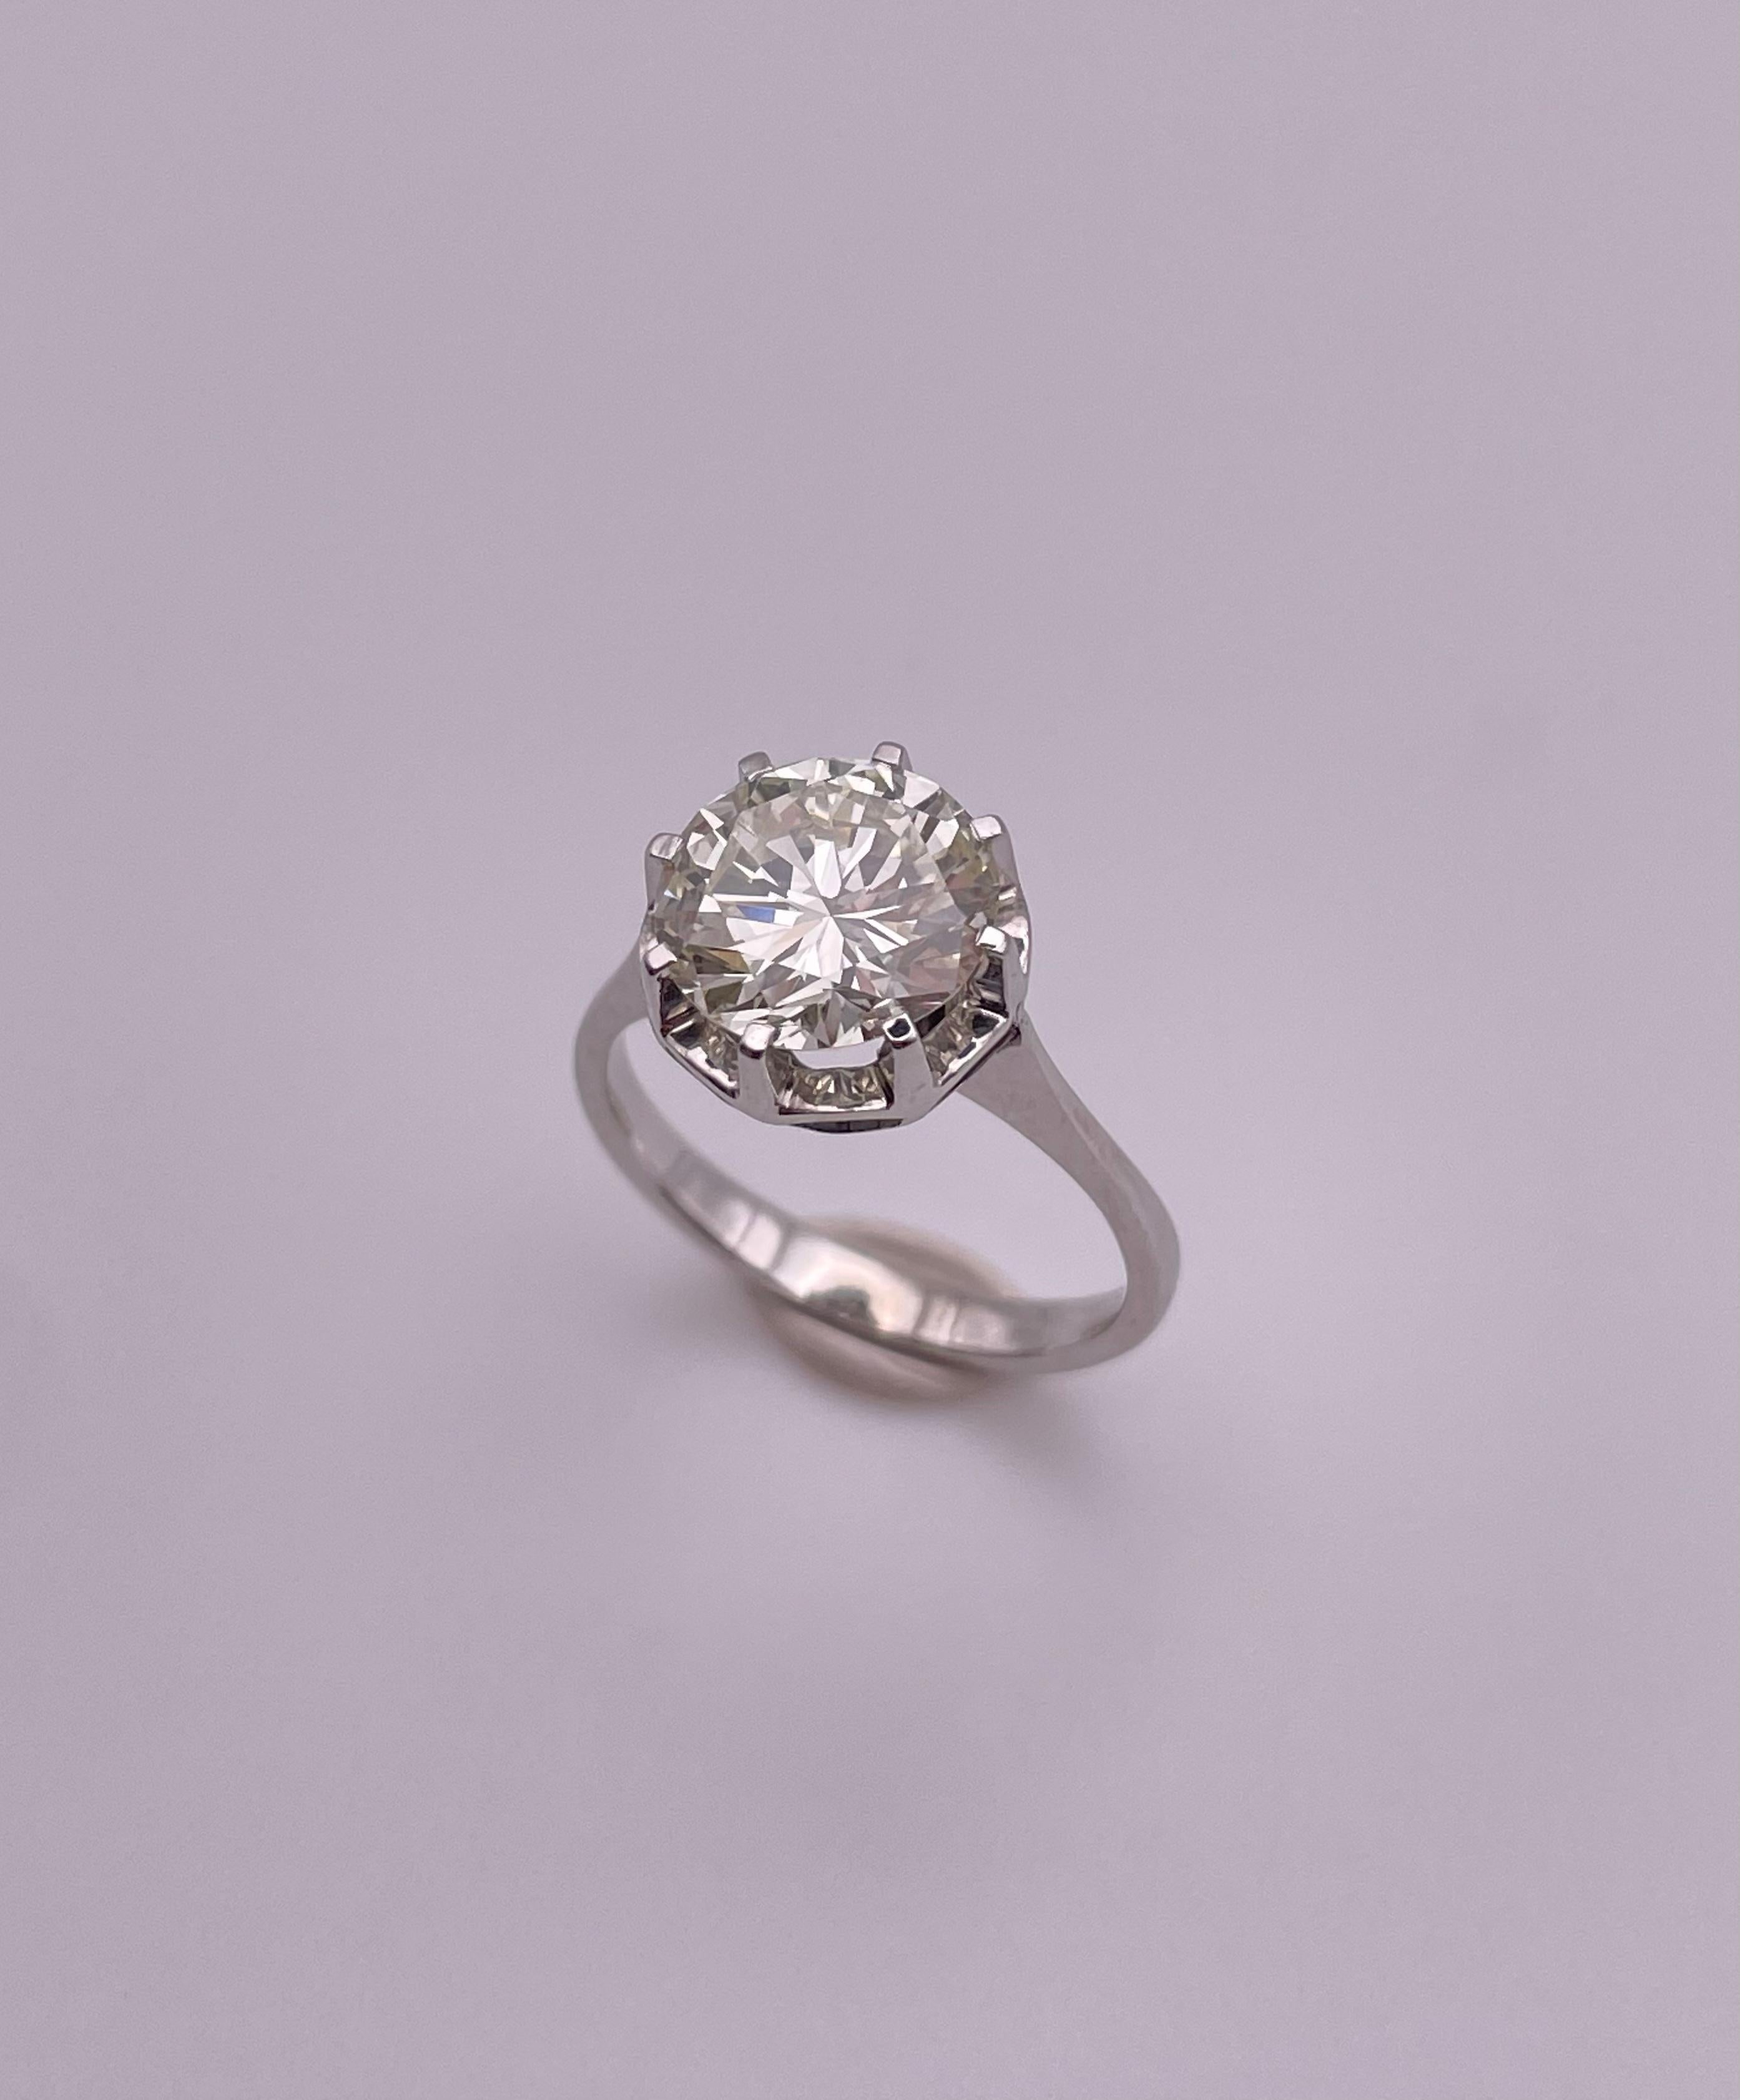 Women's or Men's Art Deco 2.91 Carat Old Cut Diamond Solitaire Engagement Ring, circa 1950